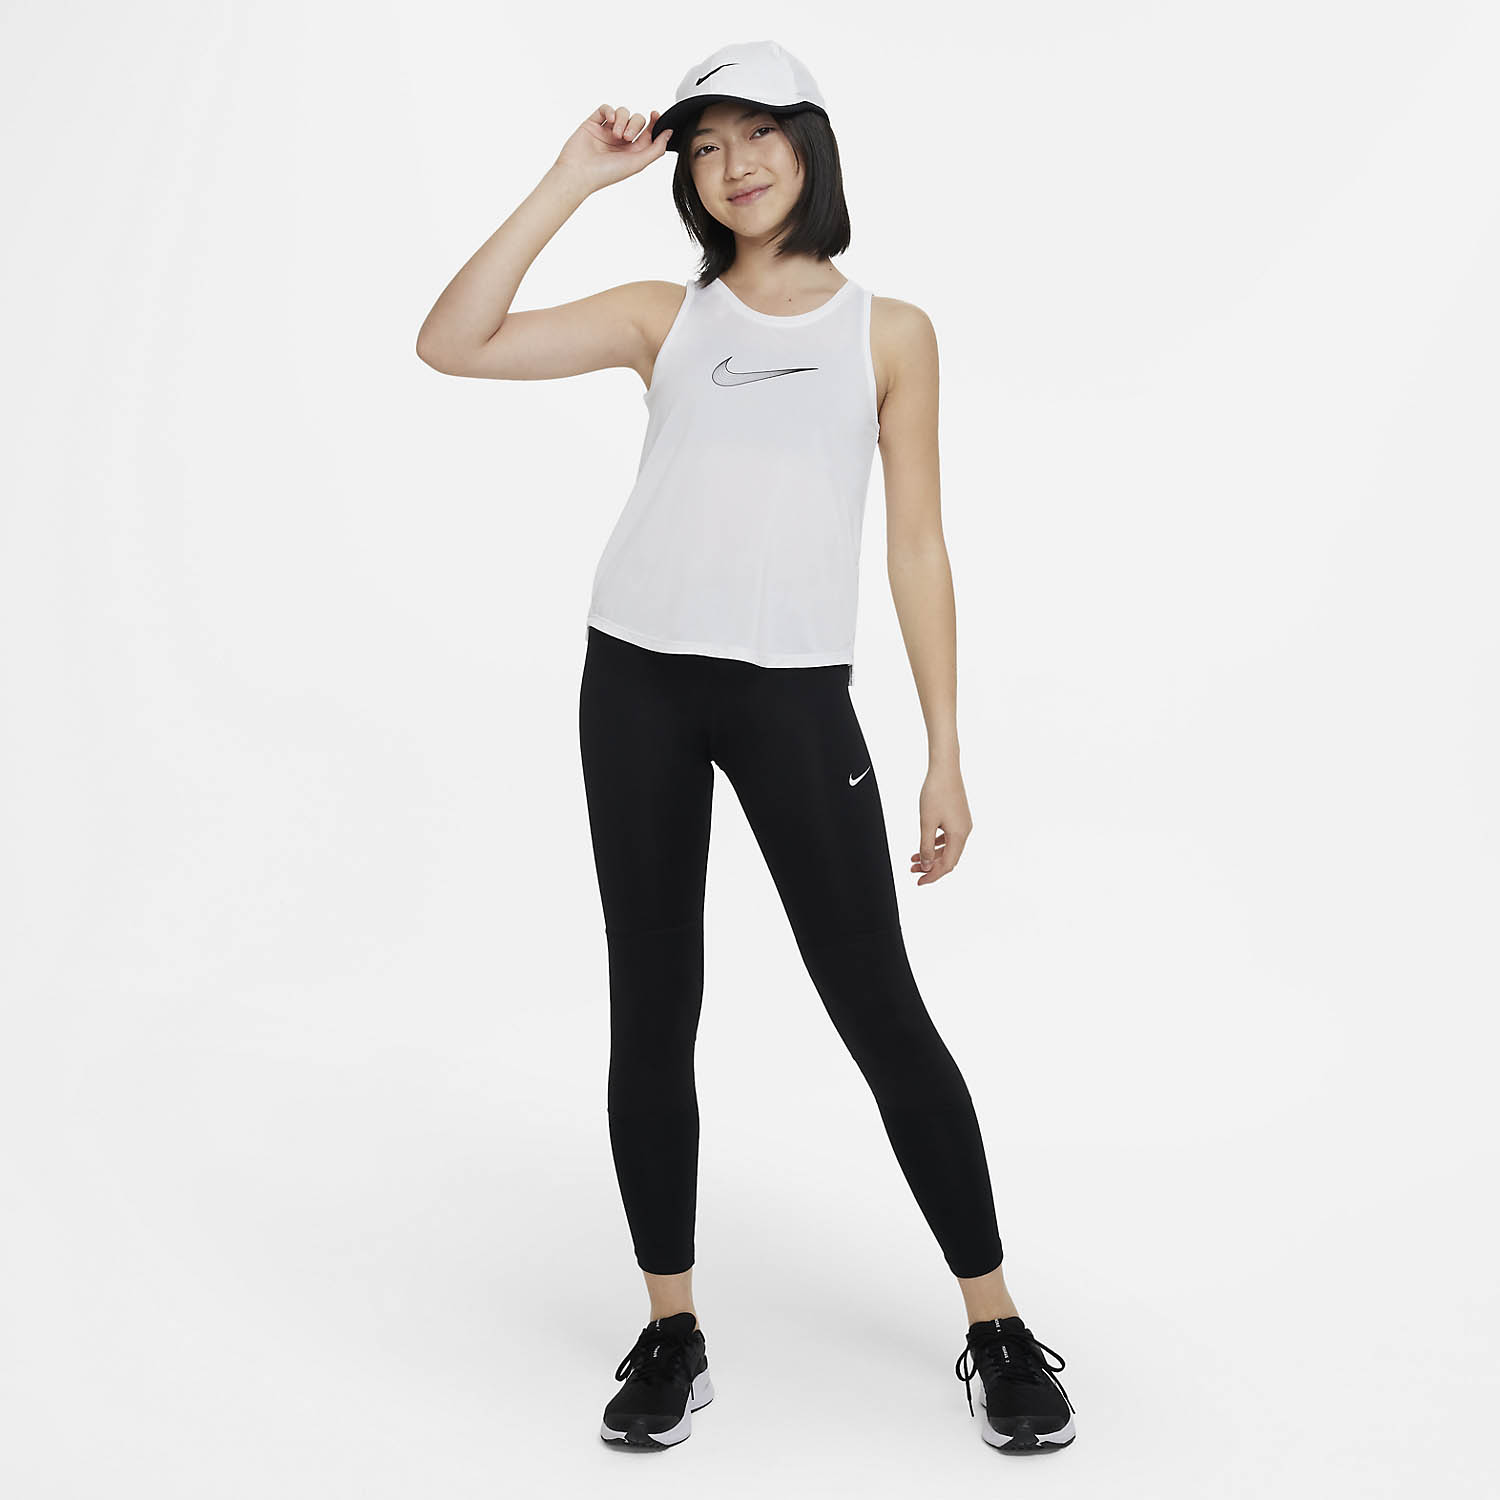 Nike Dri-FIT One Tank Girl - White/Black